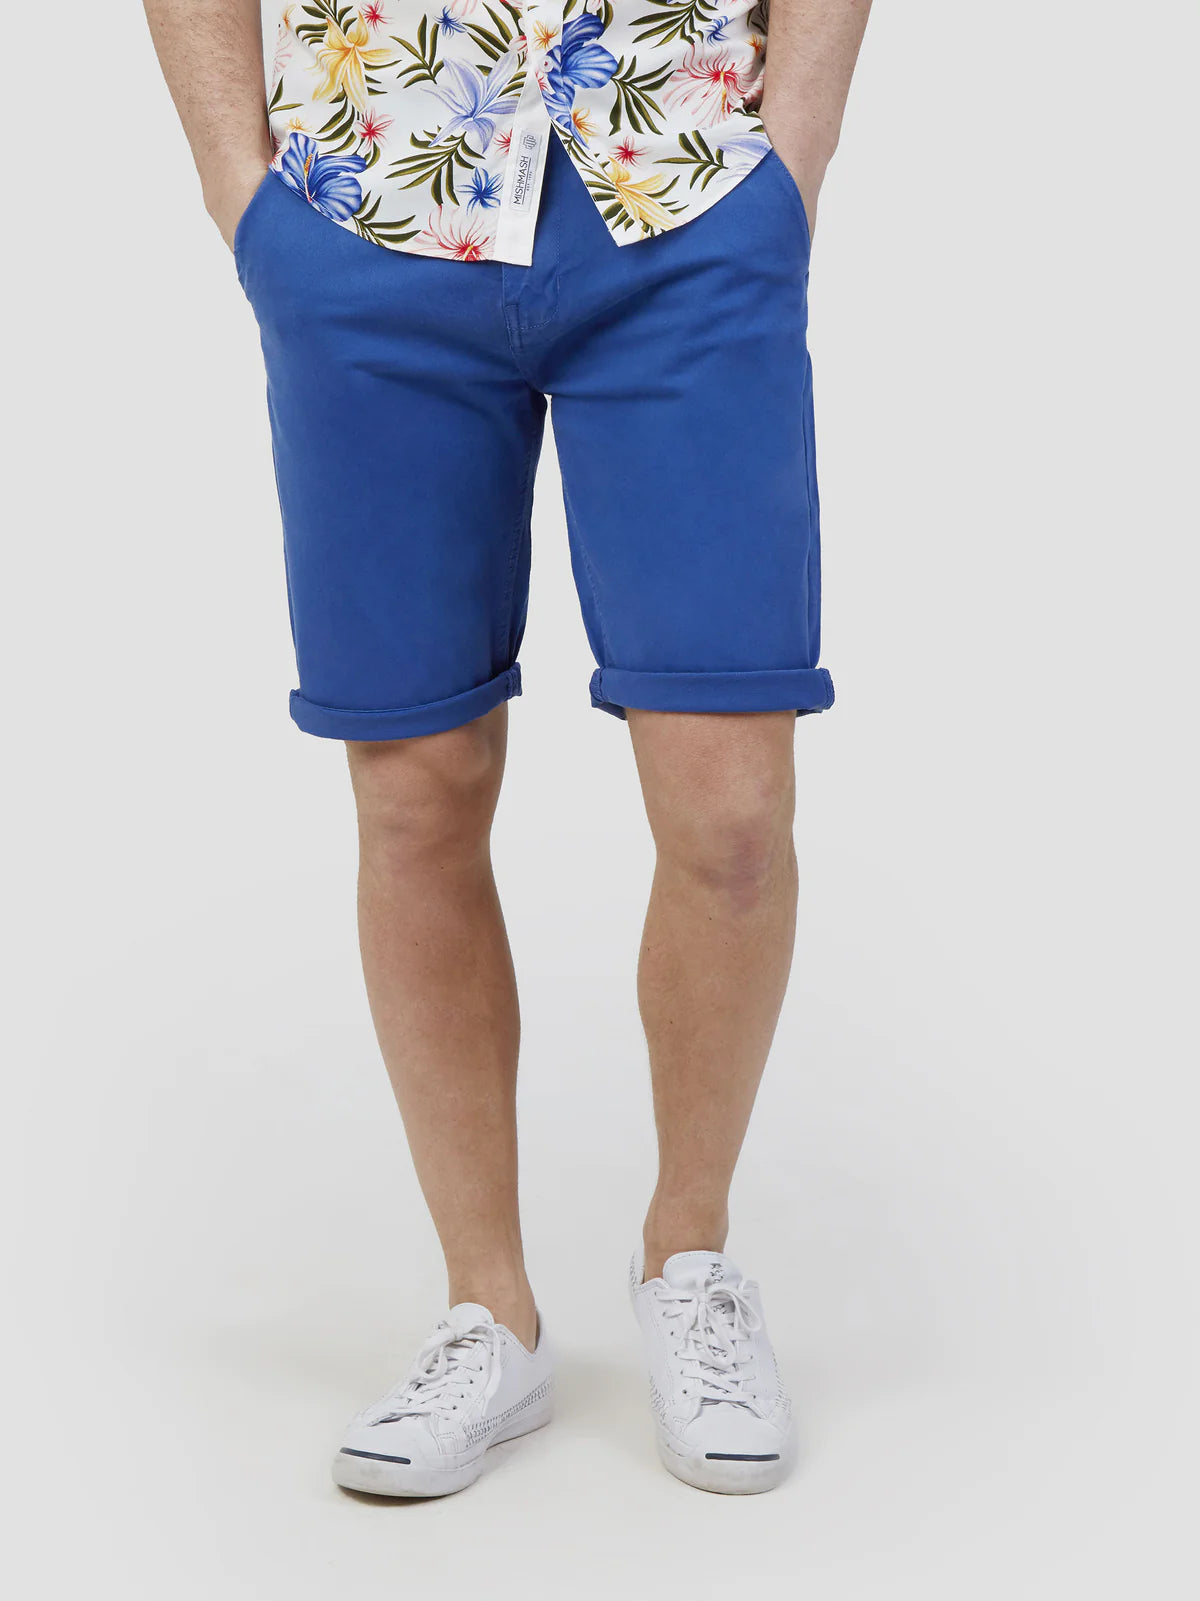 Mish Mash Weymouth Shorts In Royal Blue